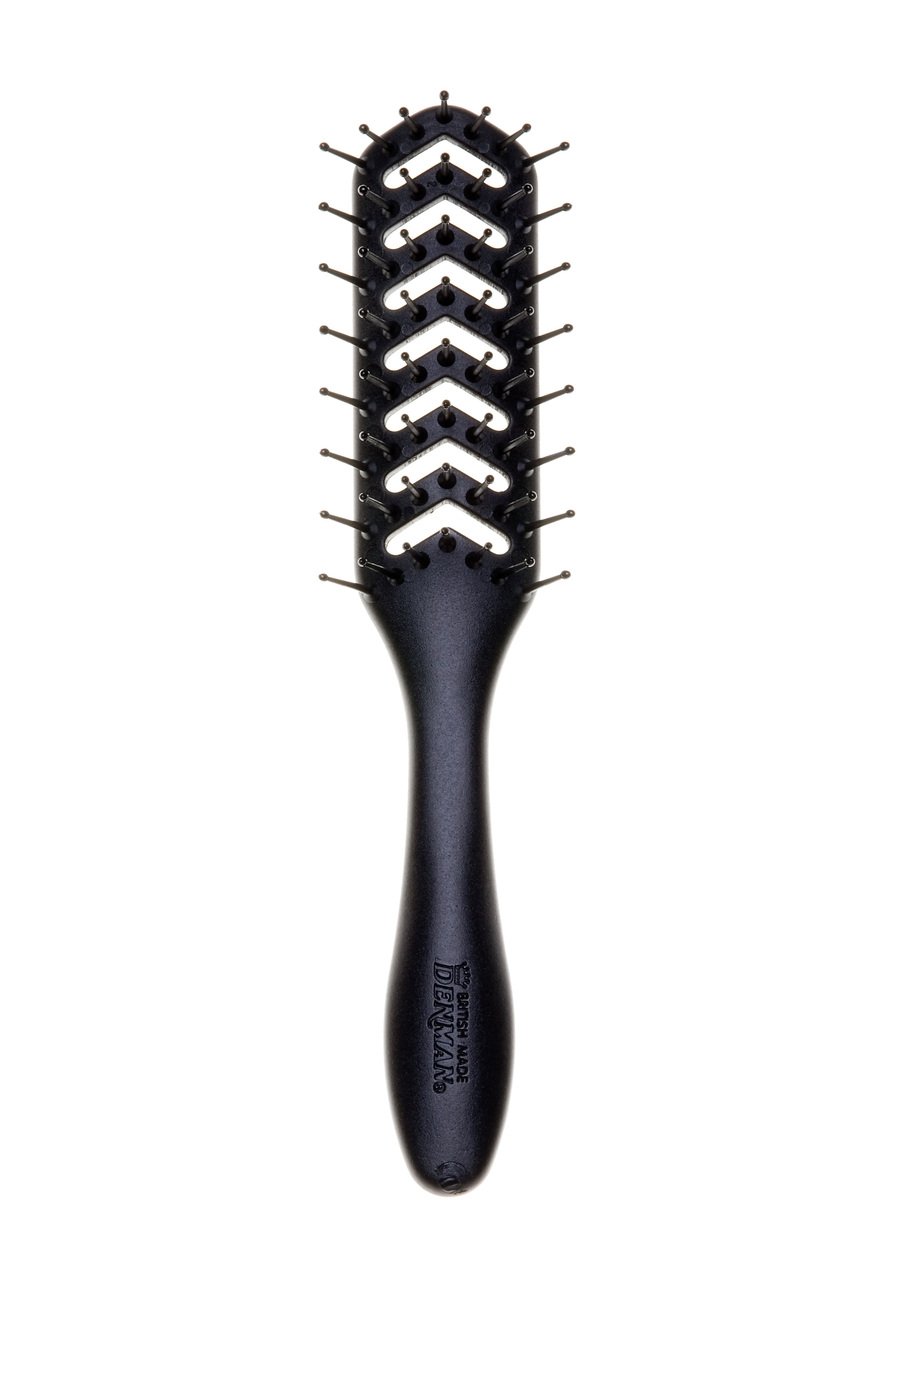 Denman D200 Hyflex Vented Styling Hairbrush